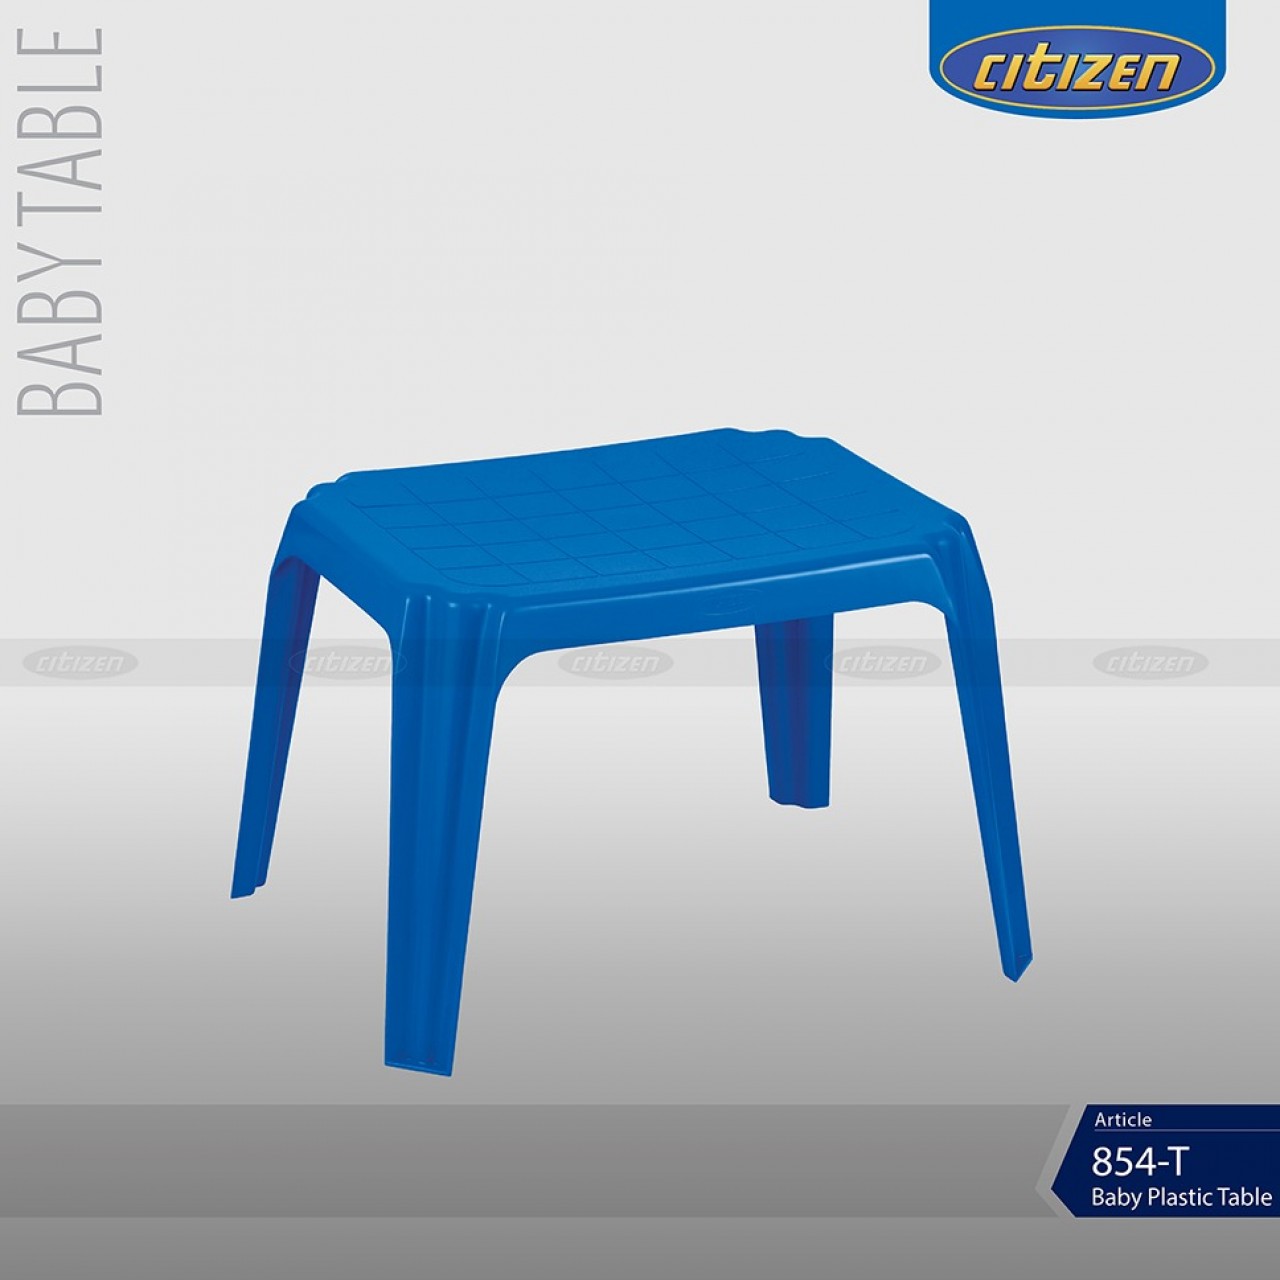 Citizen 854-T Regular Crystal Baby Plastic Table